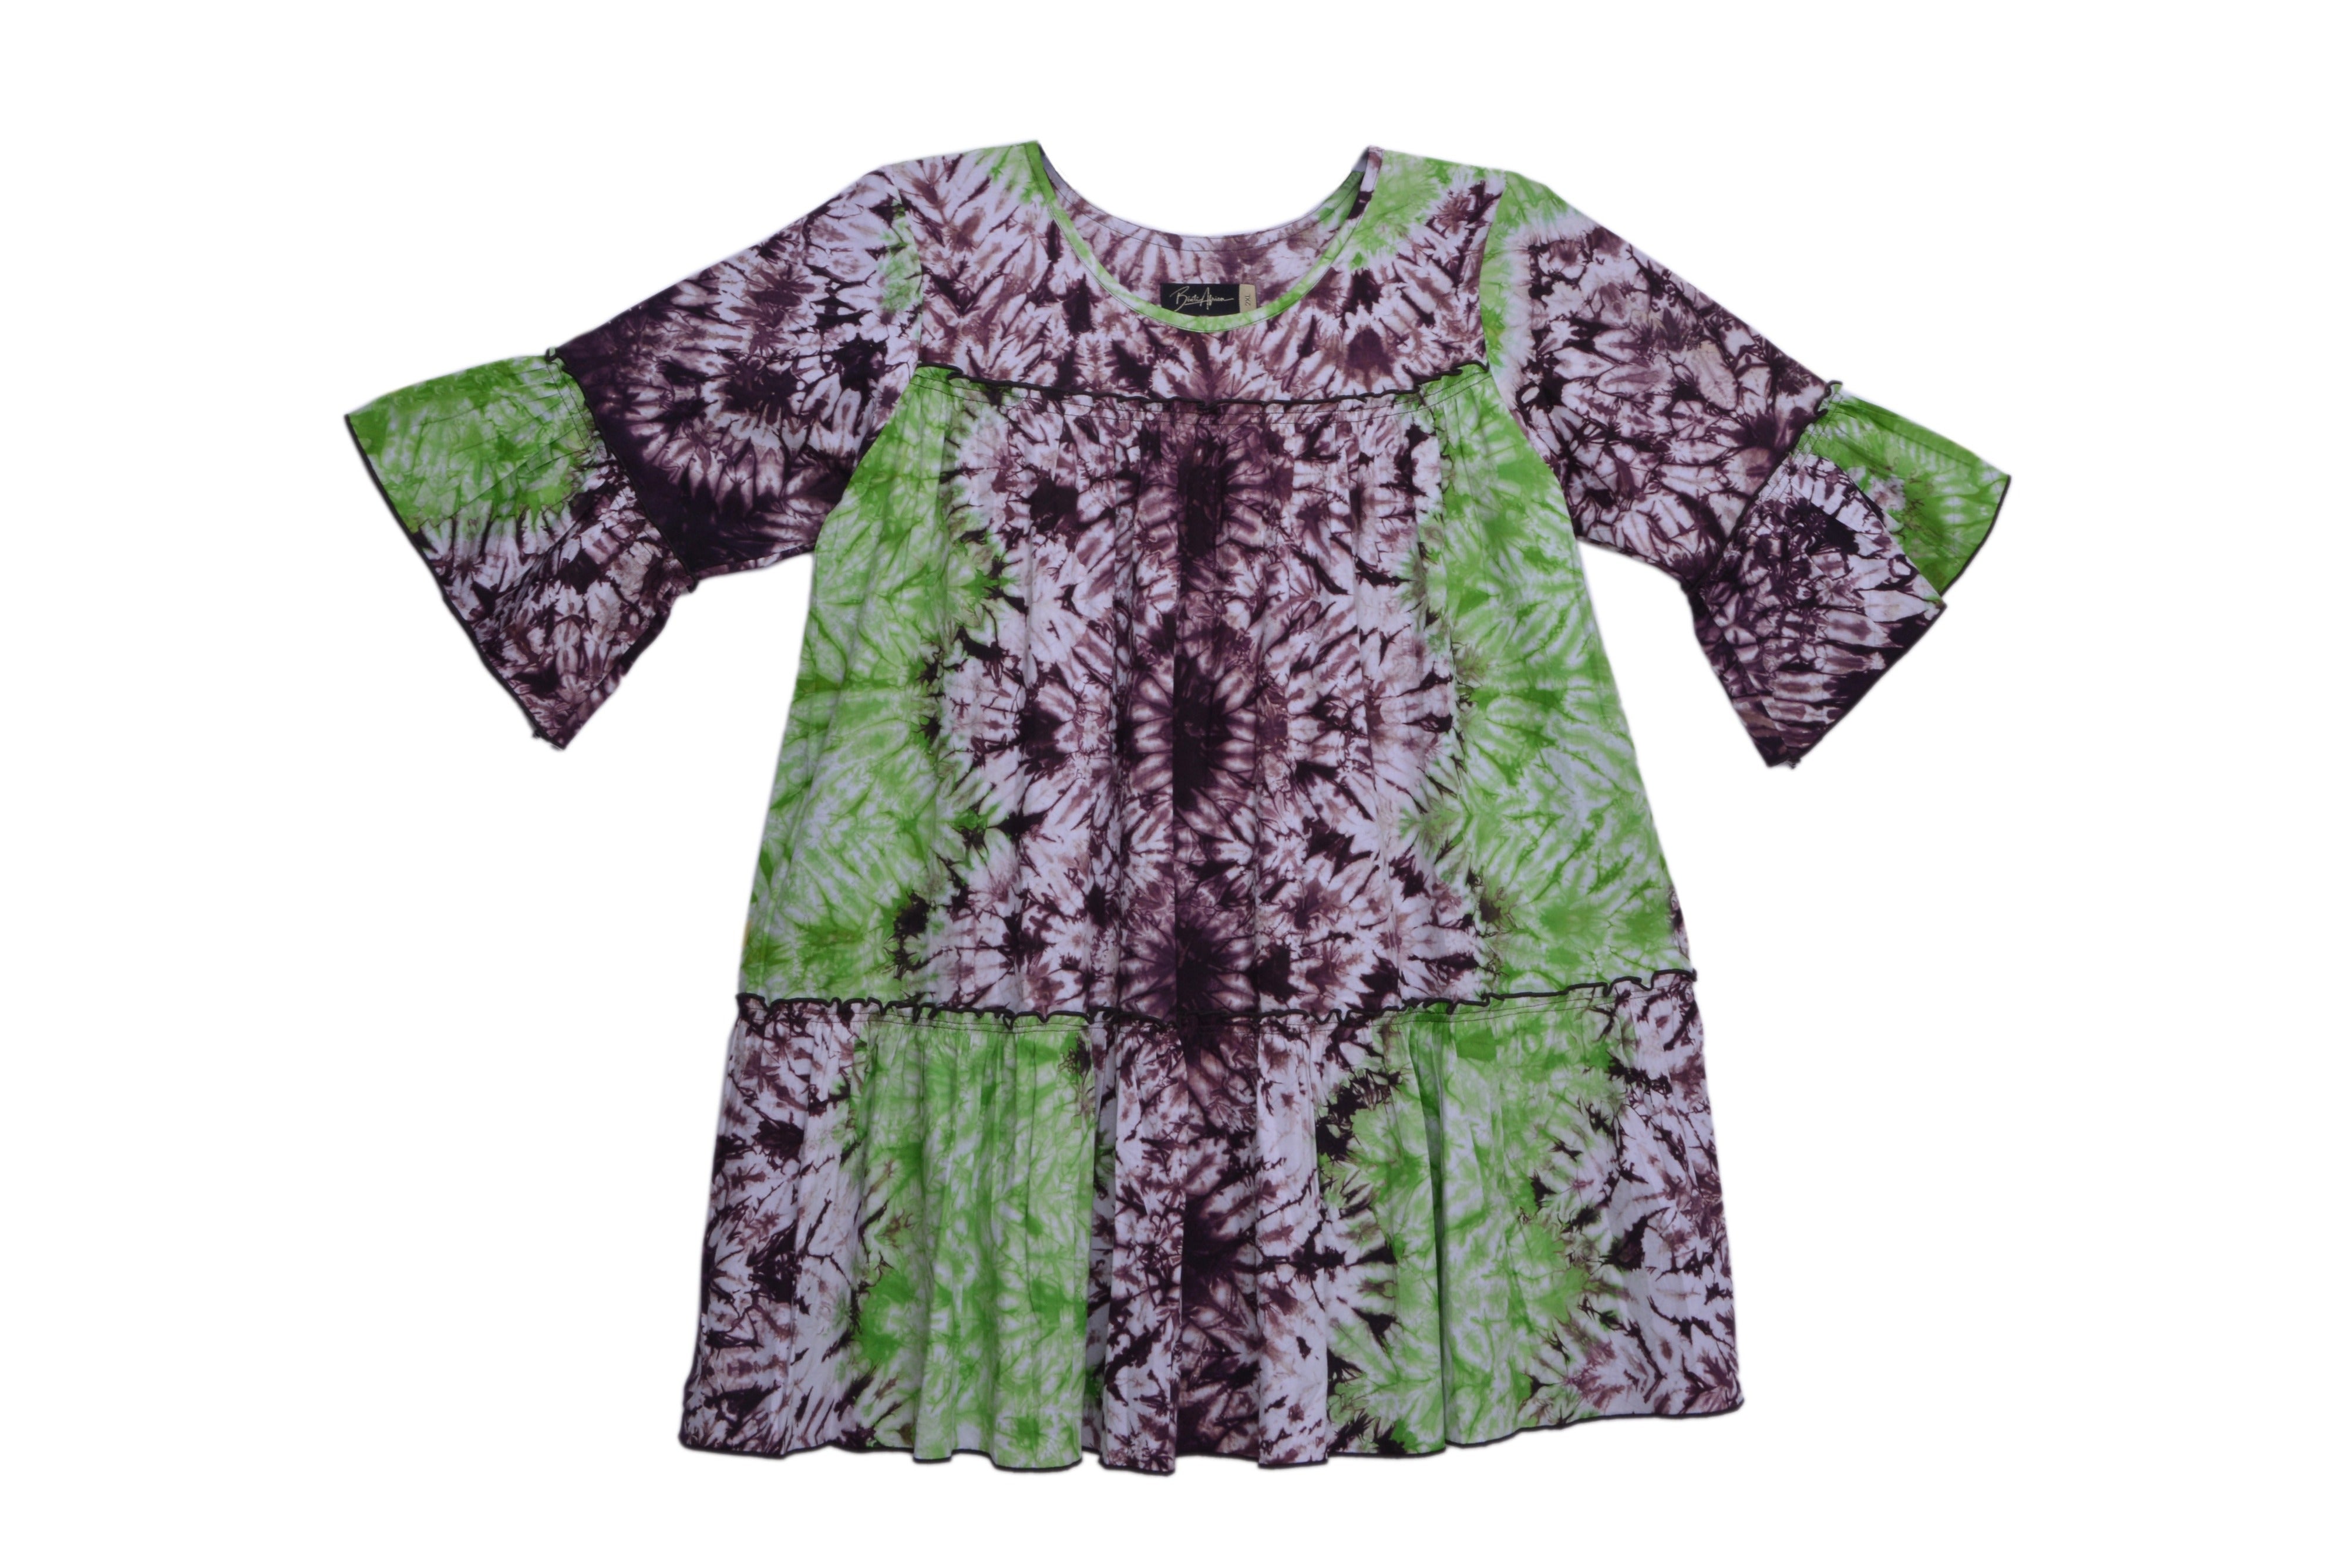 Uhuru Green :Bright Flowing Luxurious Stylish  Dress Made of Soft Cotton fabric